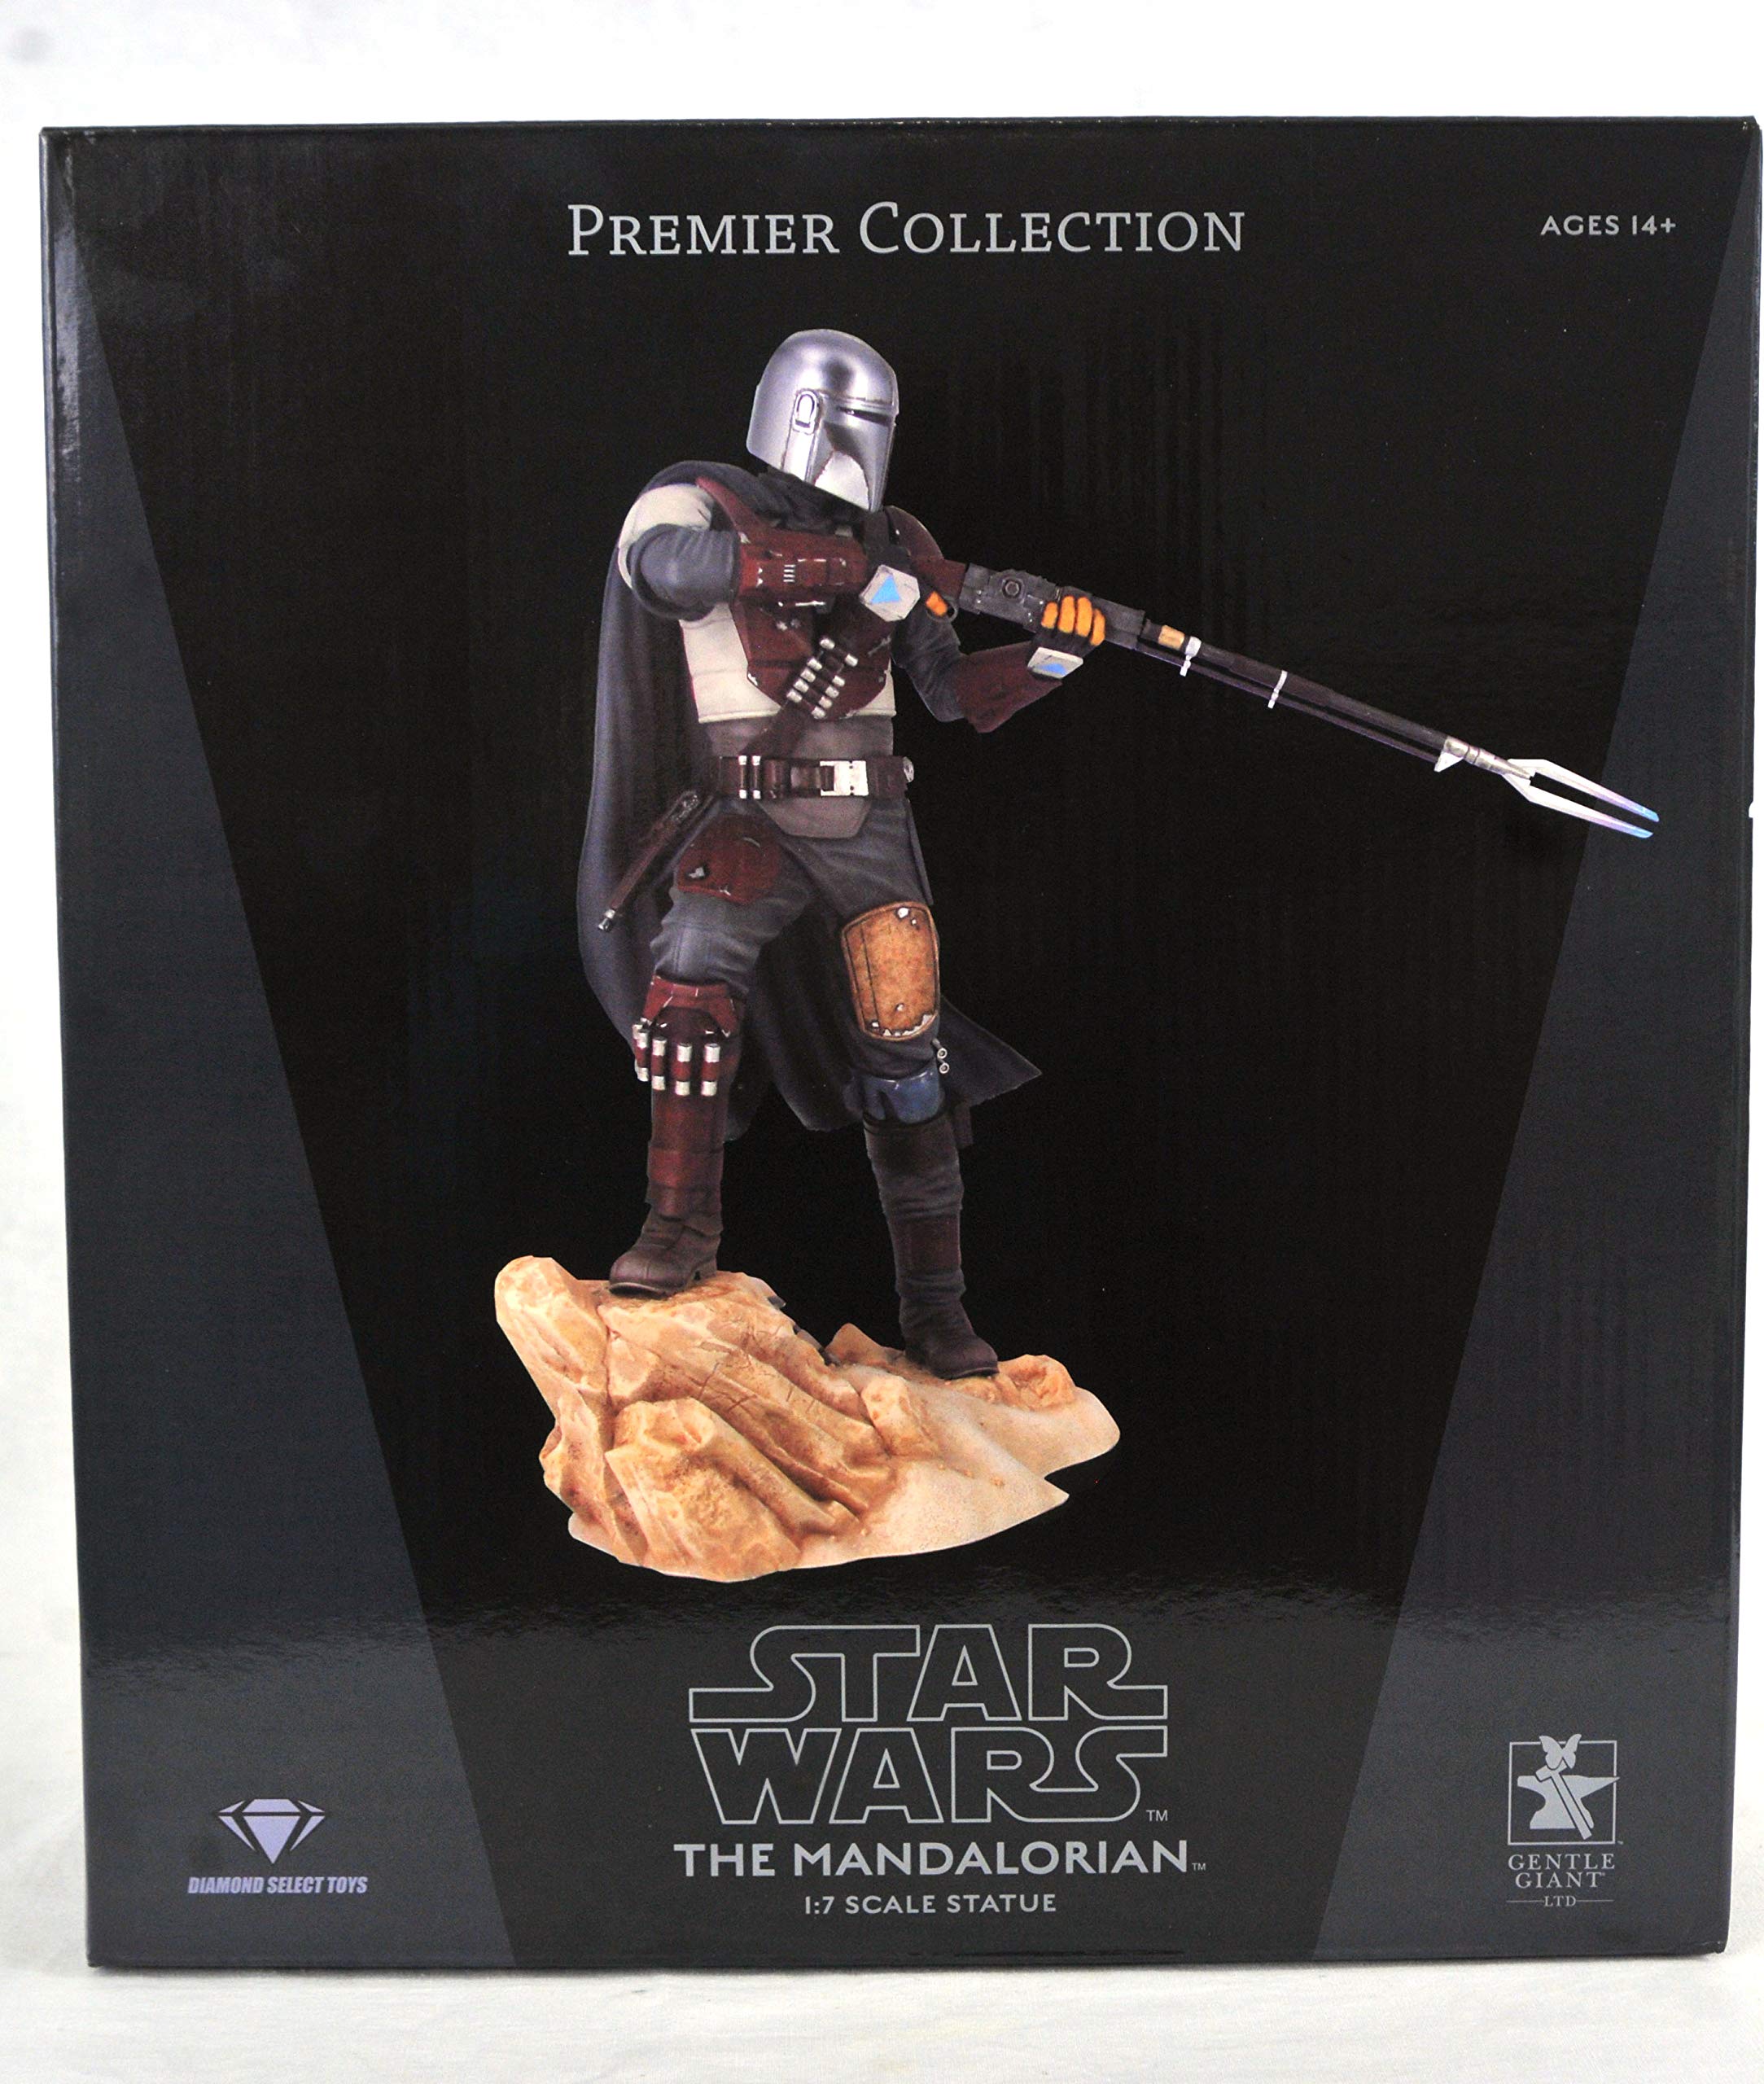 Star Wars Premier Collection: The Mandalorian MK1 Statue, Multicolor, 5 inches